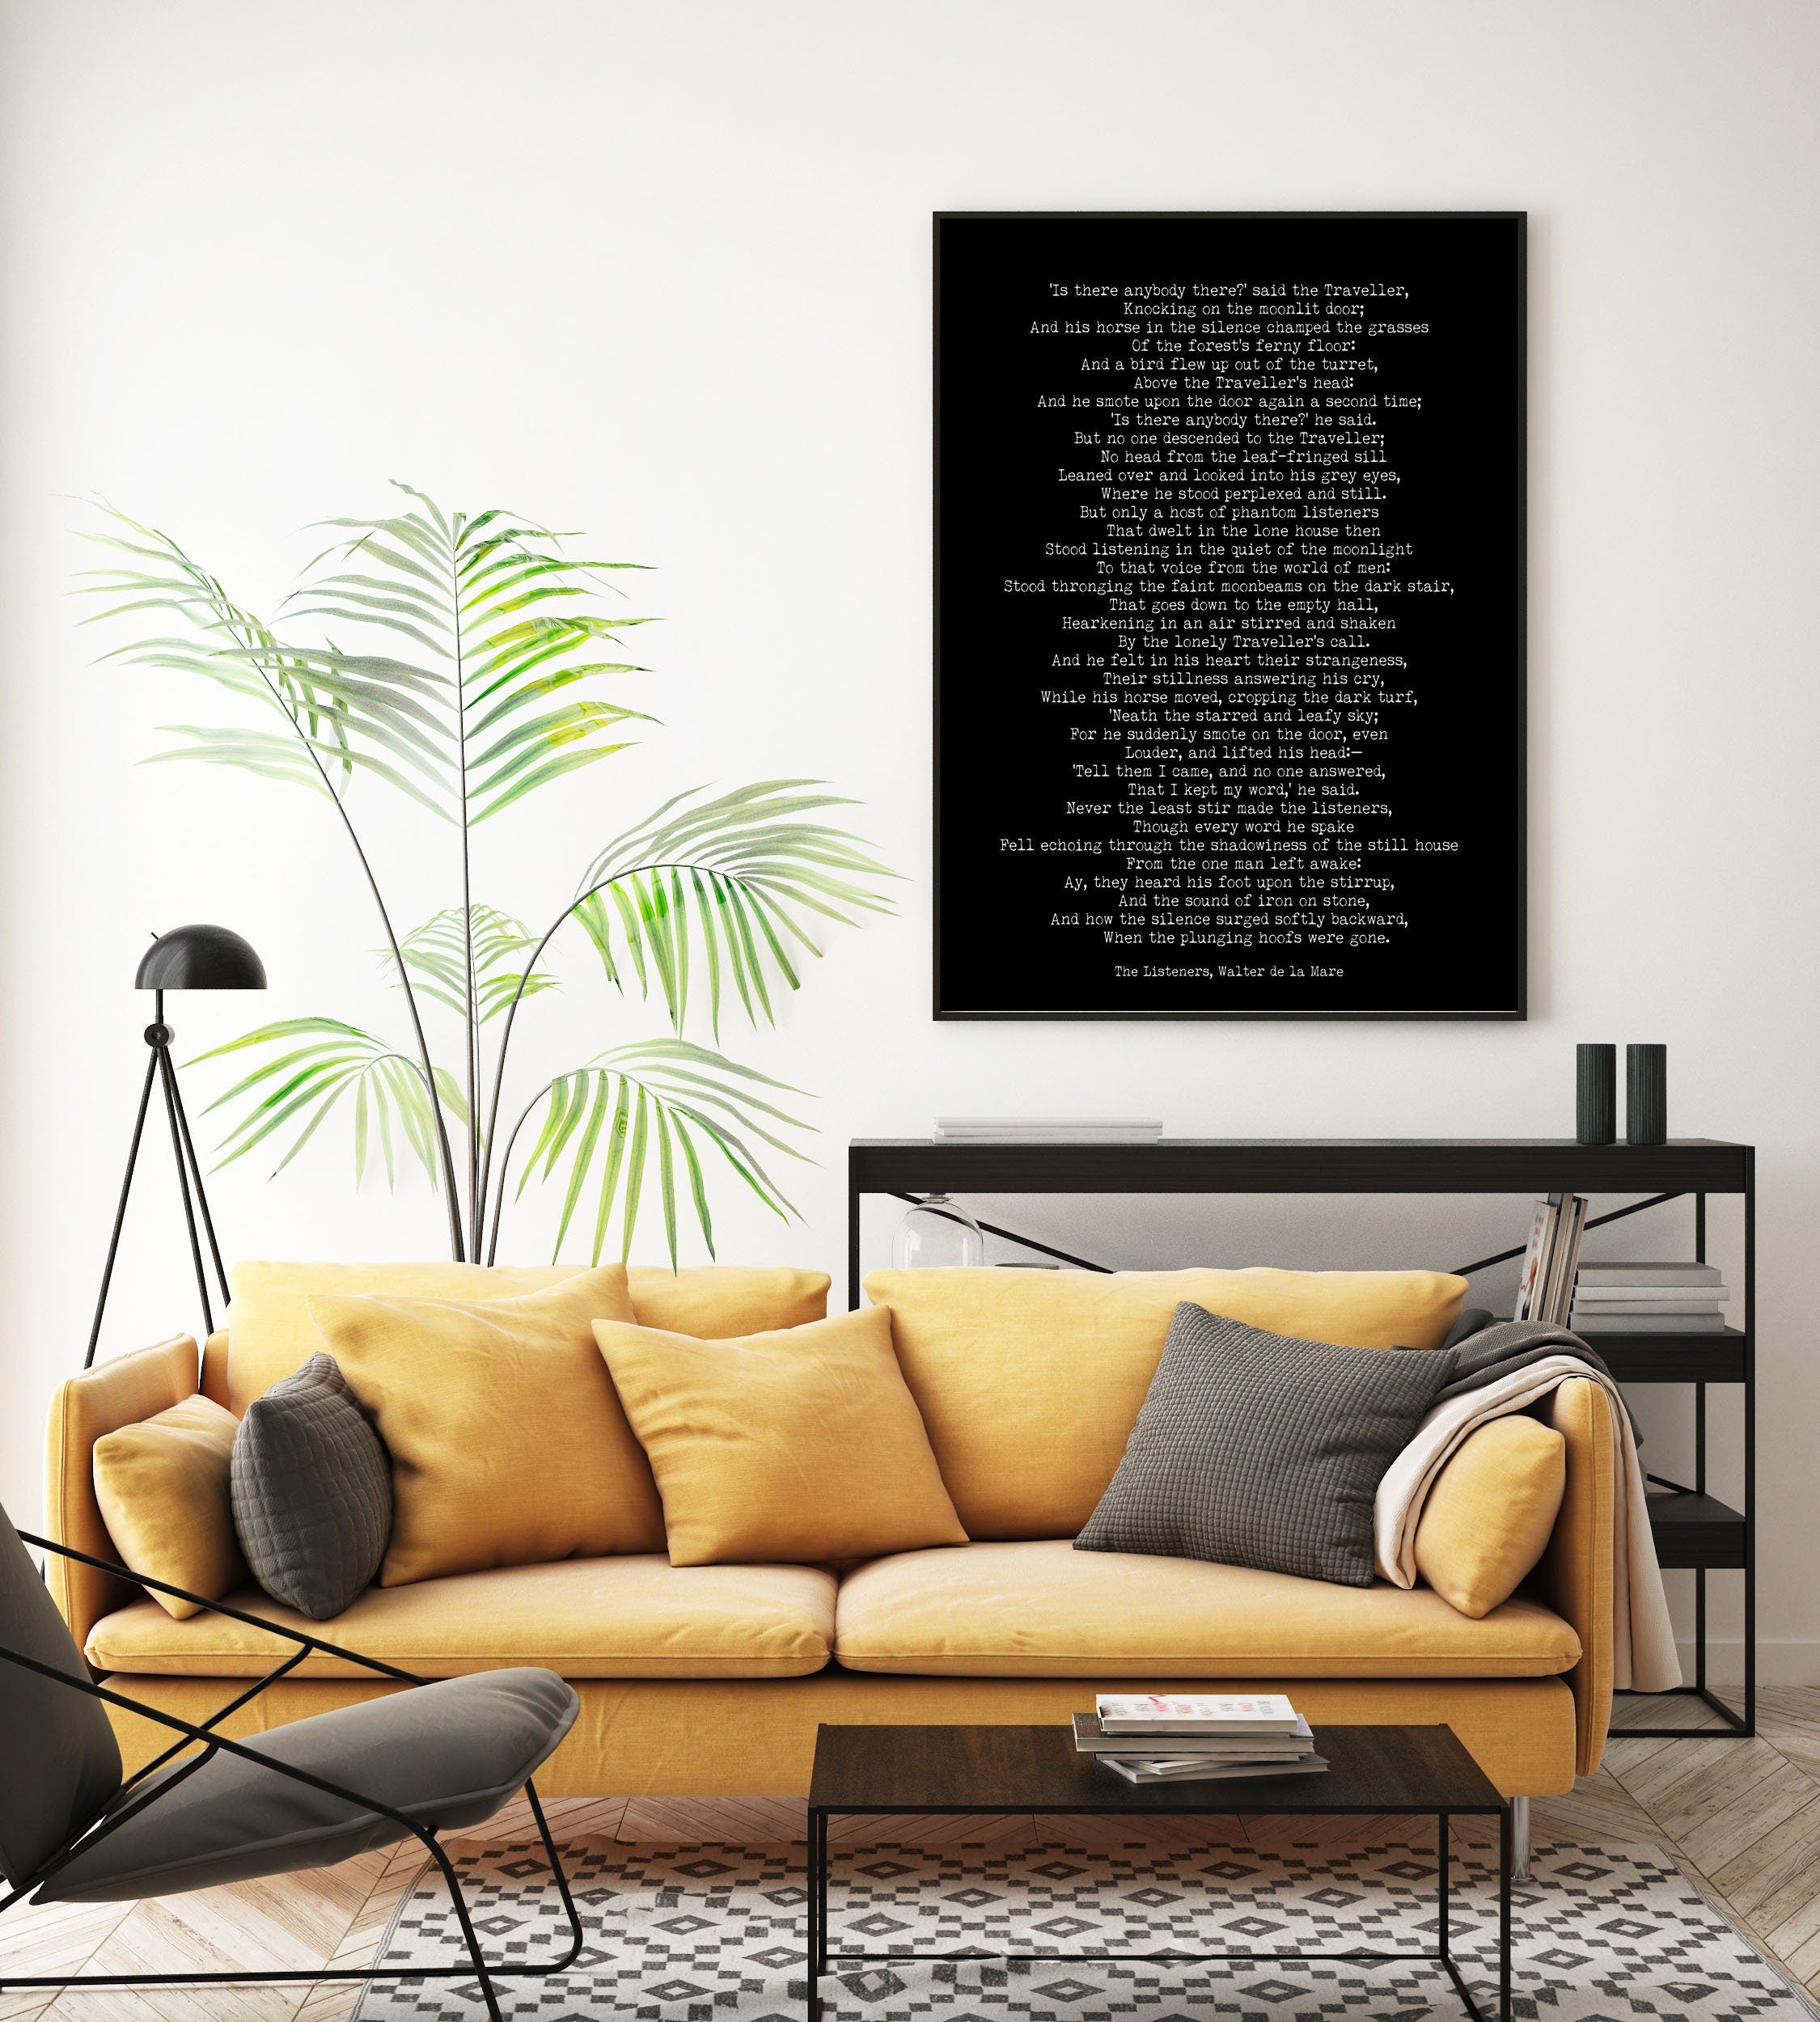 The Listeners Walter De La Mare Wall Art Print in Black & White for Living Room Wall Art, Unframed